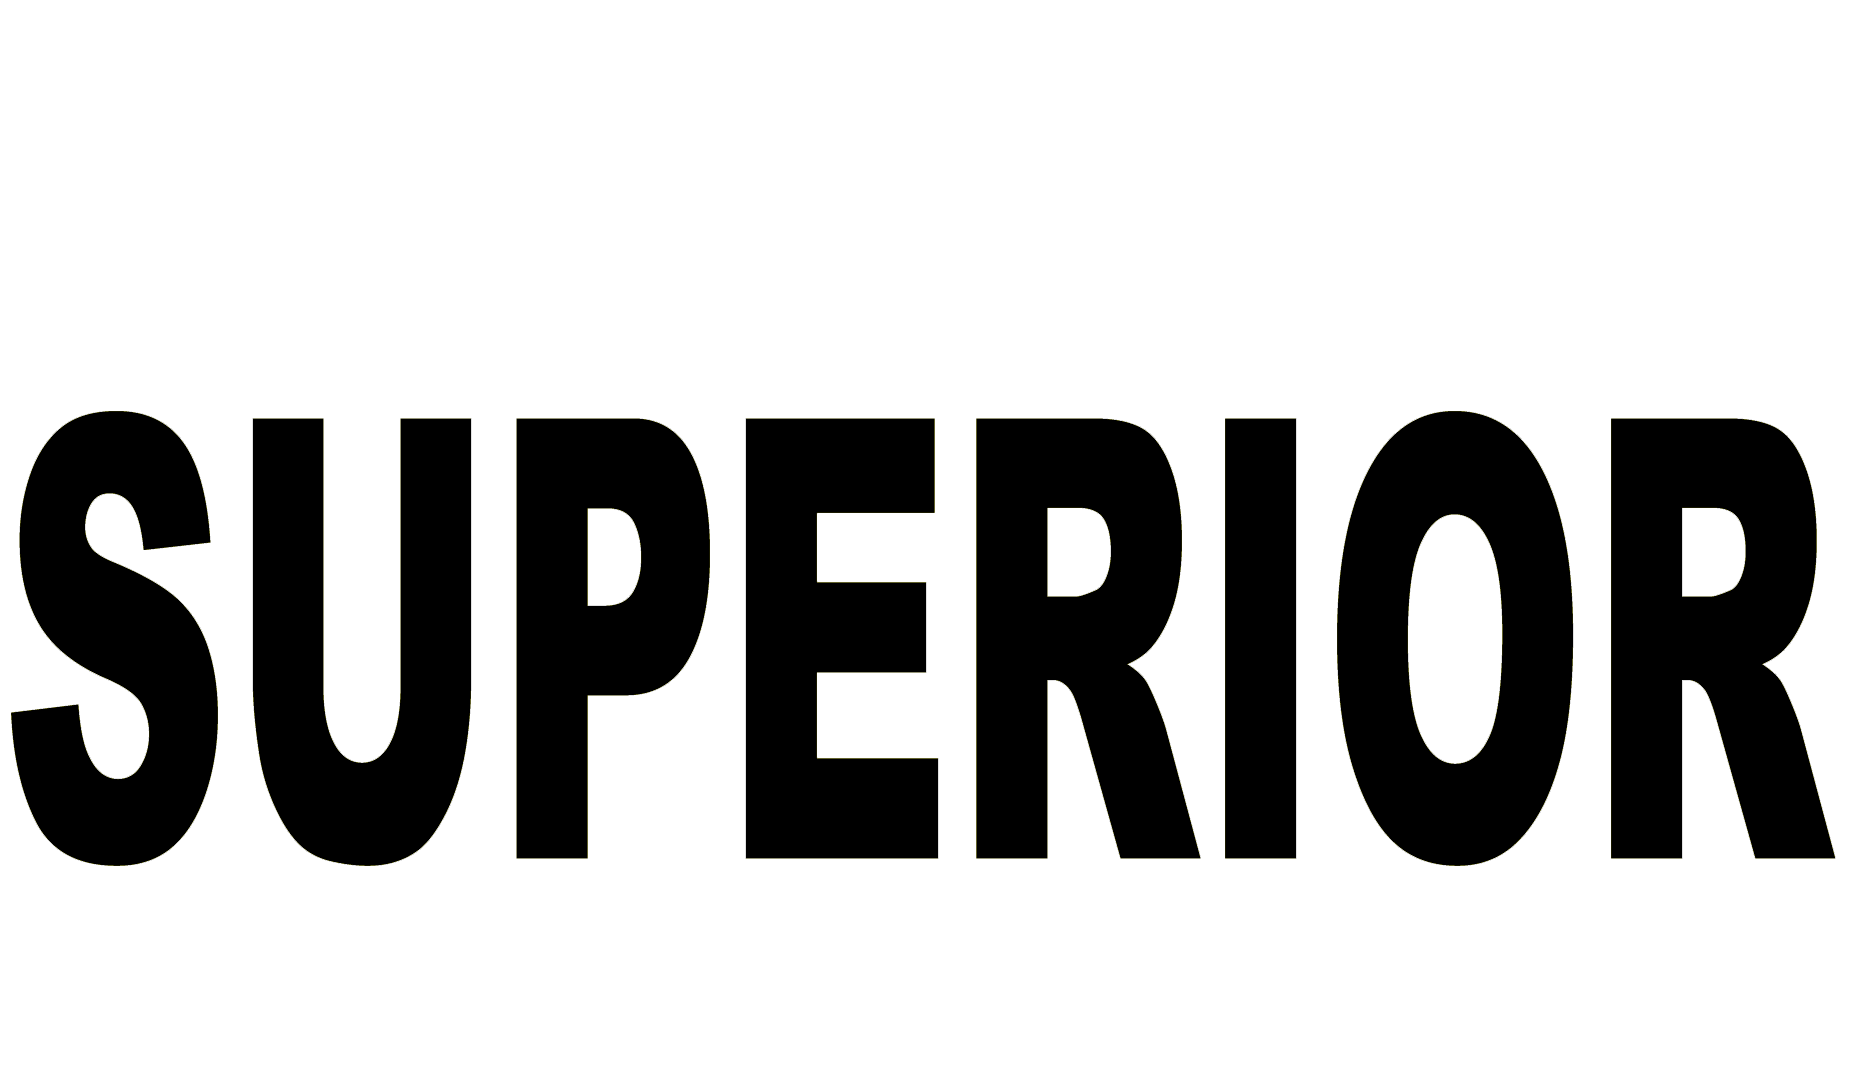 Colégio e Curso Supeior - Grupo Educacional